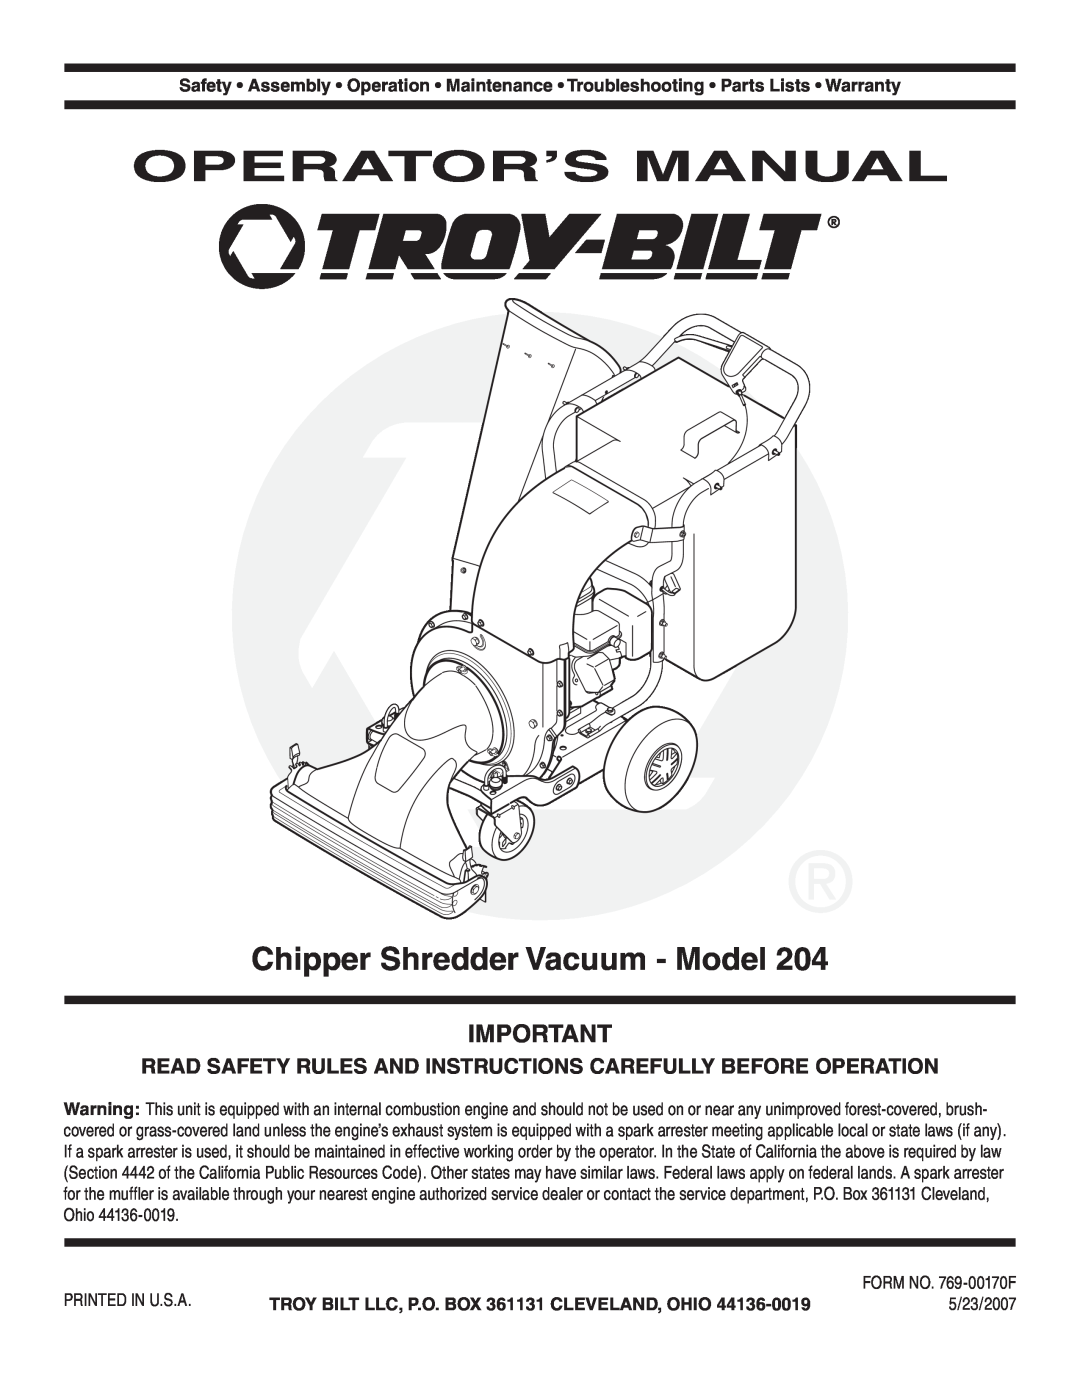 Troy-Bilt 204 warranty Operator’S Manual, Chipper Shredder Vacuum - Model, TROY BILT LLC, P.O. BOX 361131 CLEVELAND, OHIO 